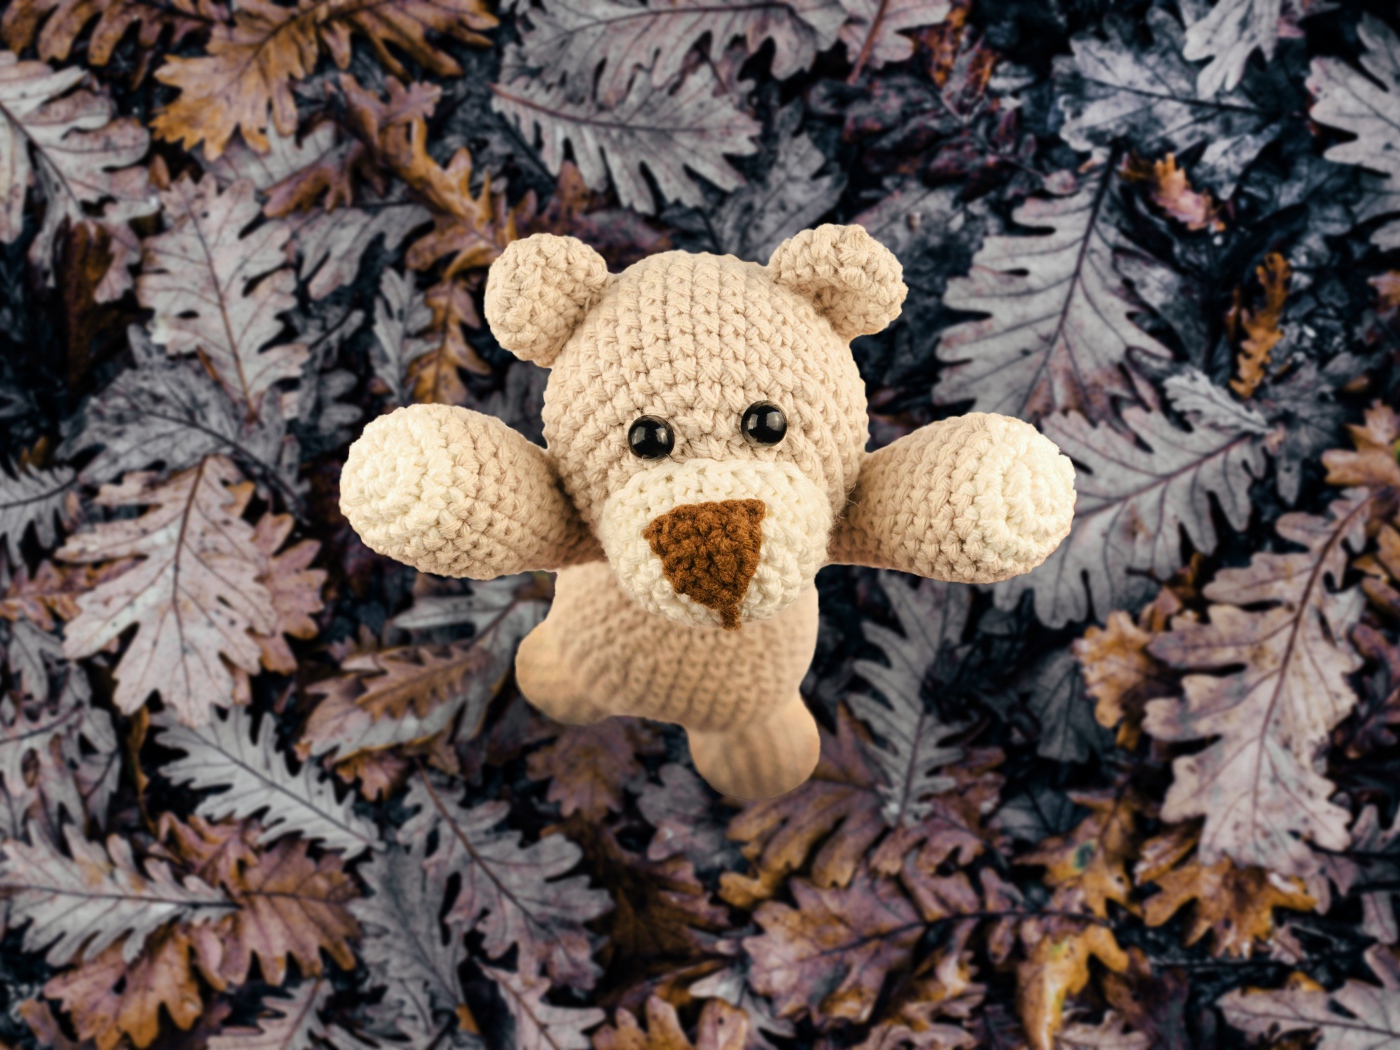 Knitted toy teddy bear on foliage